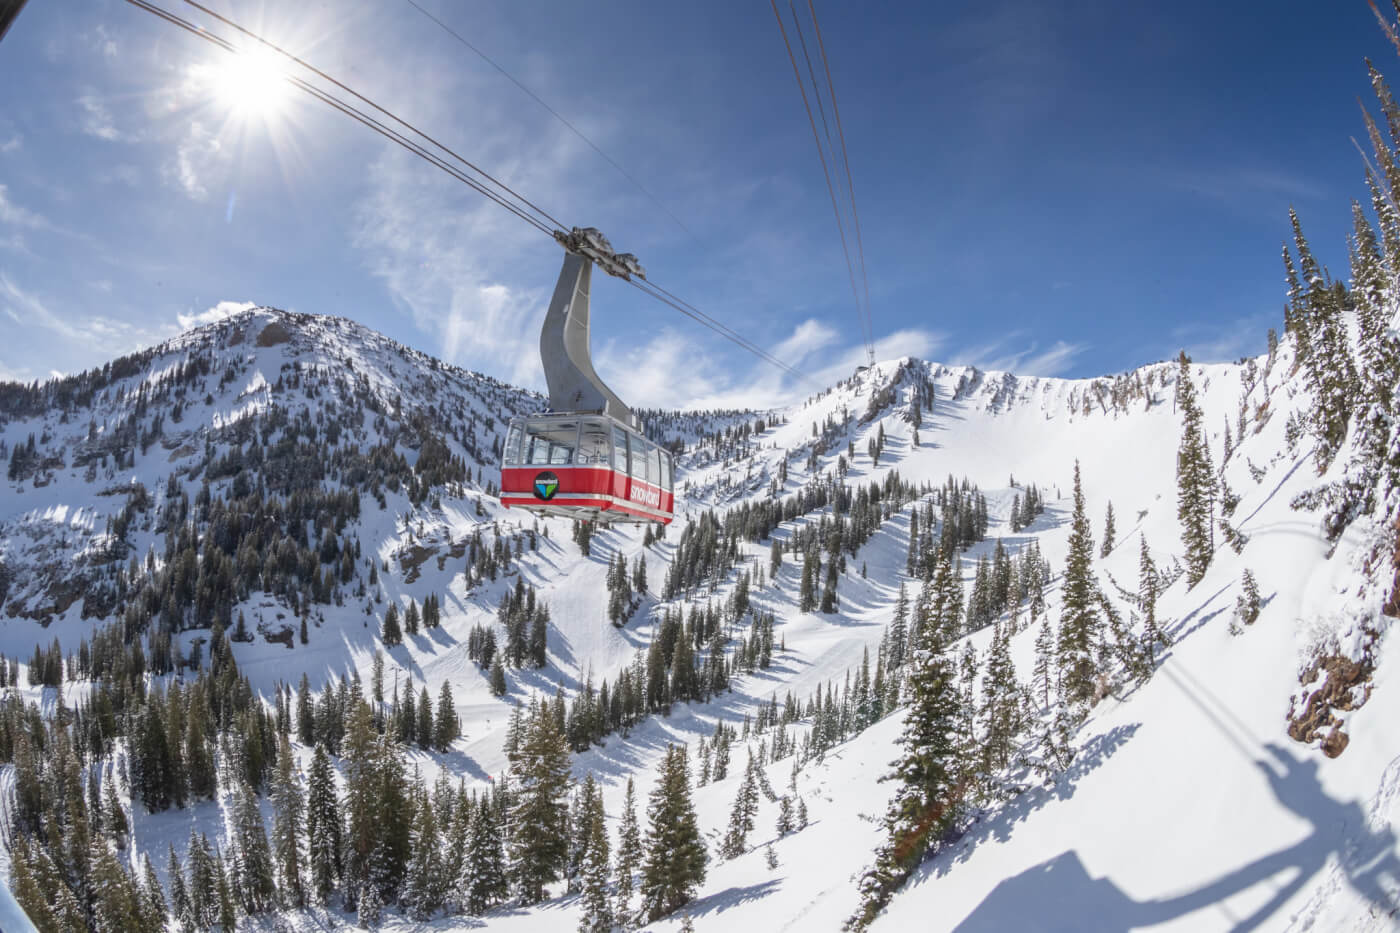 Gondola at Snowbird, the perfect spot for a selfie.